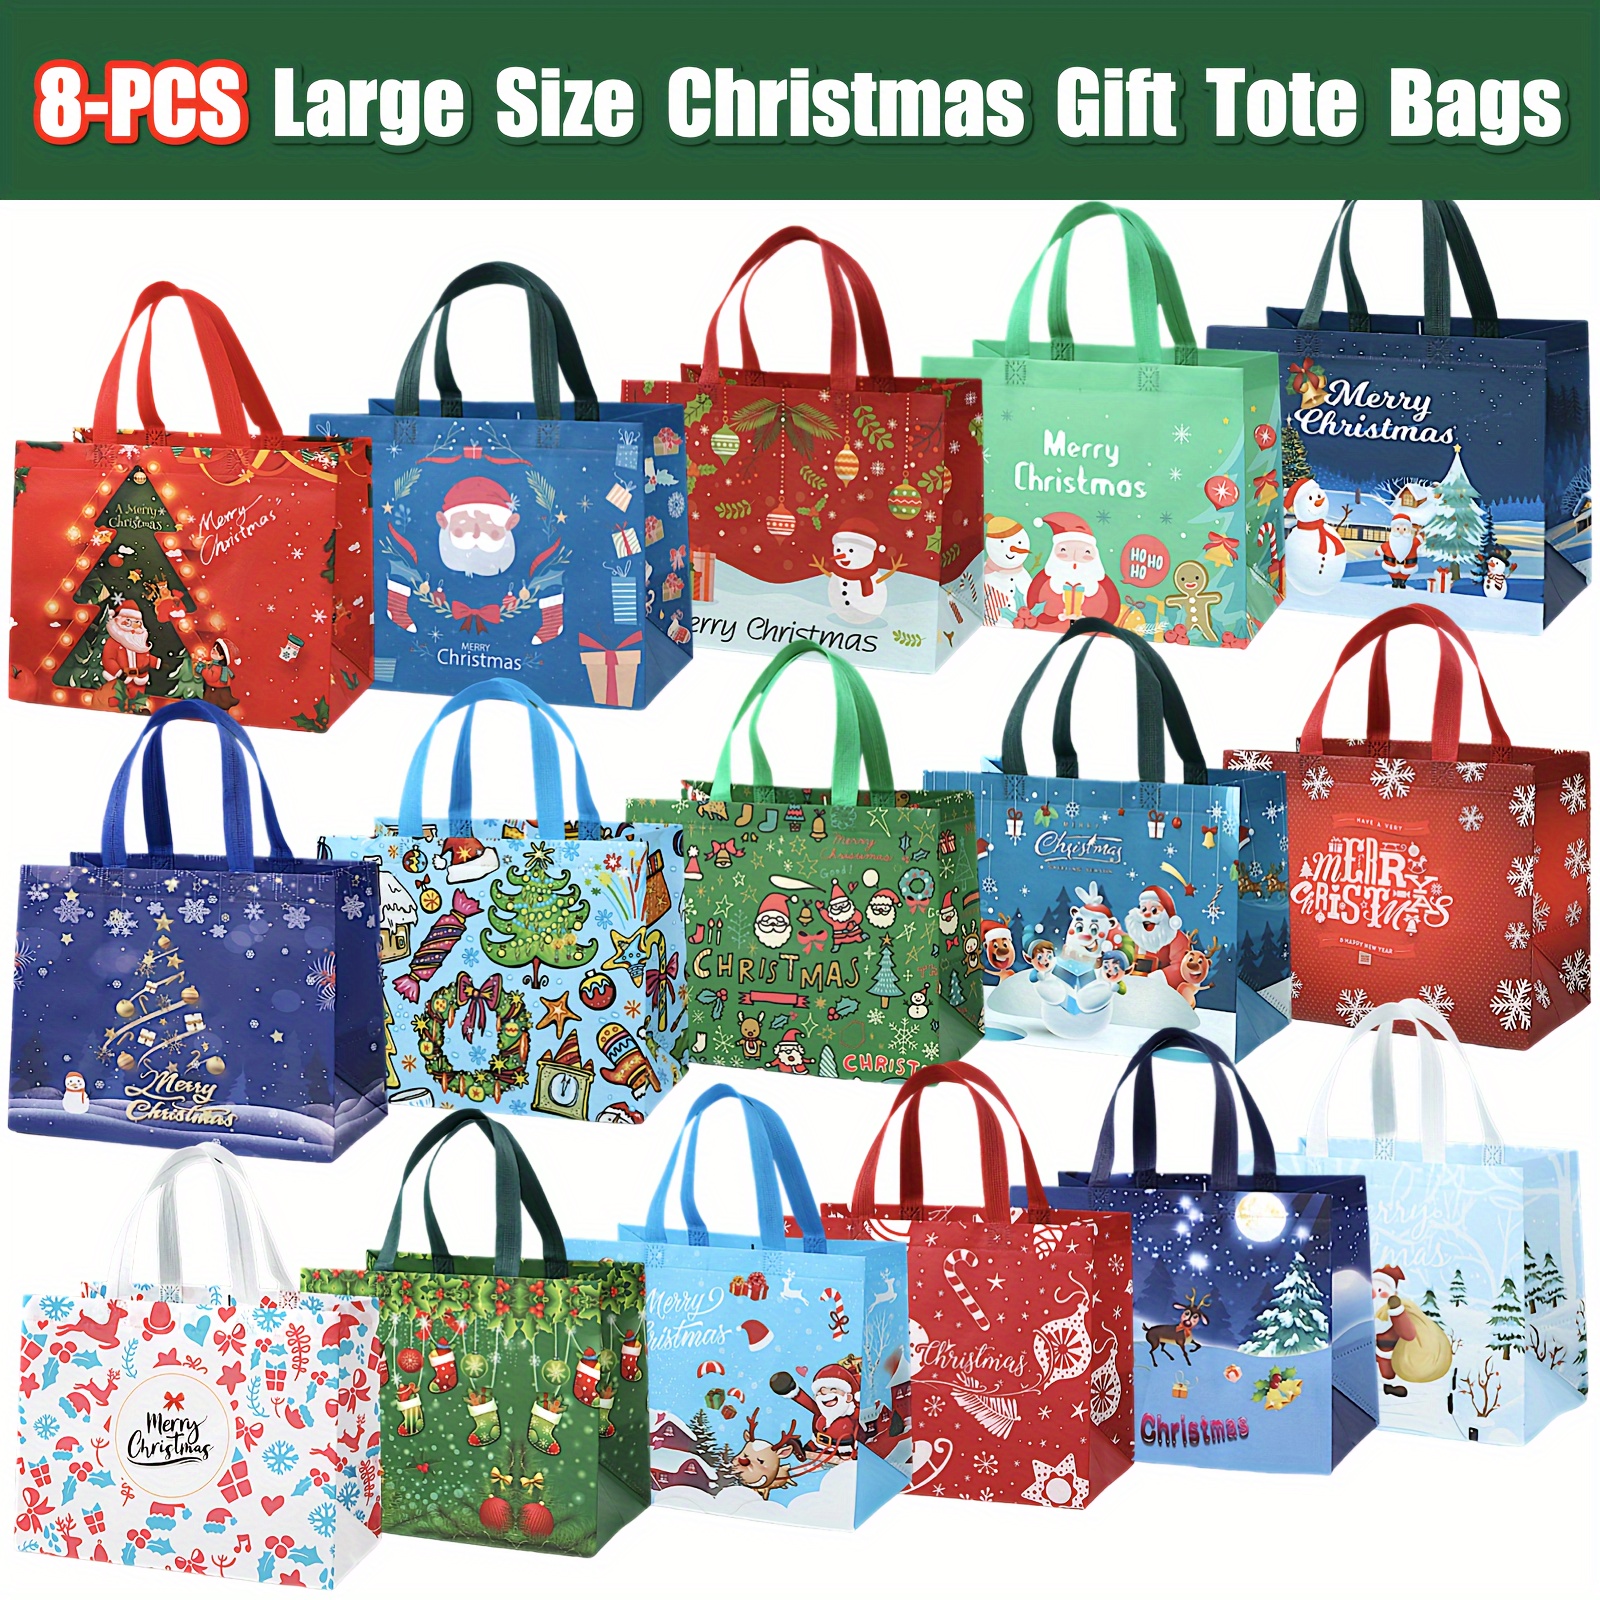 Fantastic 8pcs Large Plastic Christmas Gift Bags